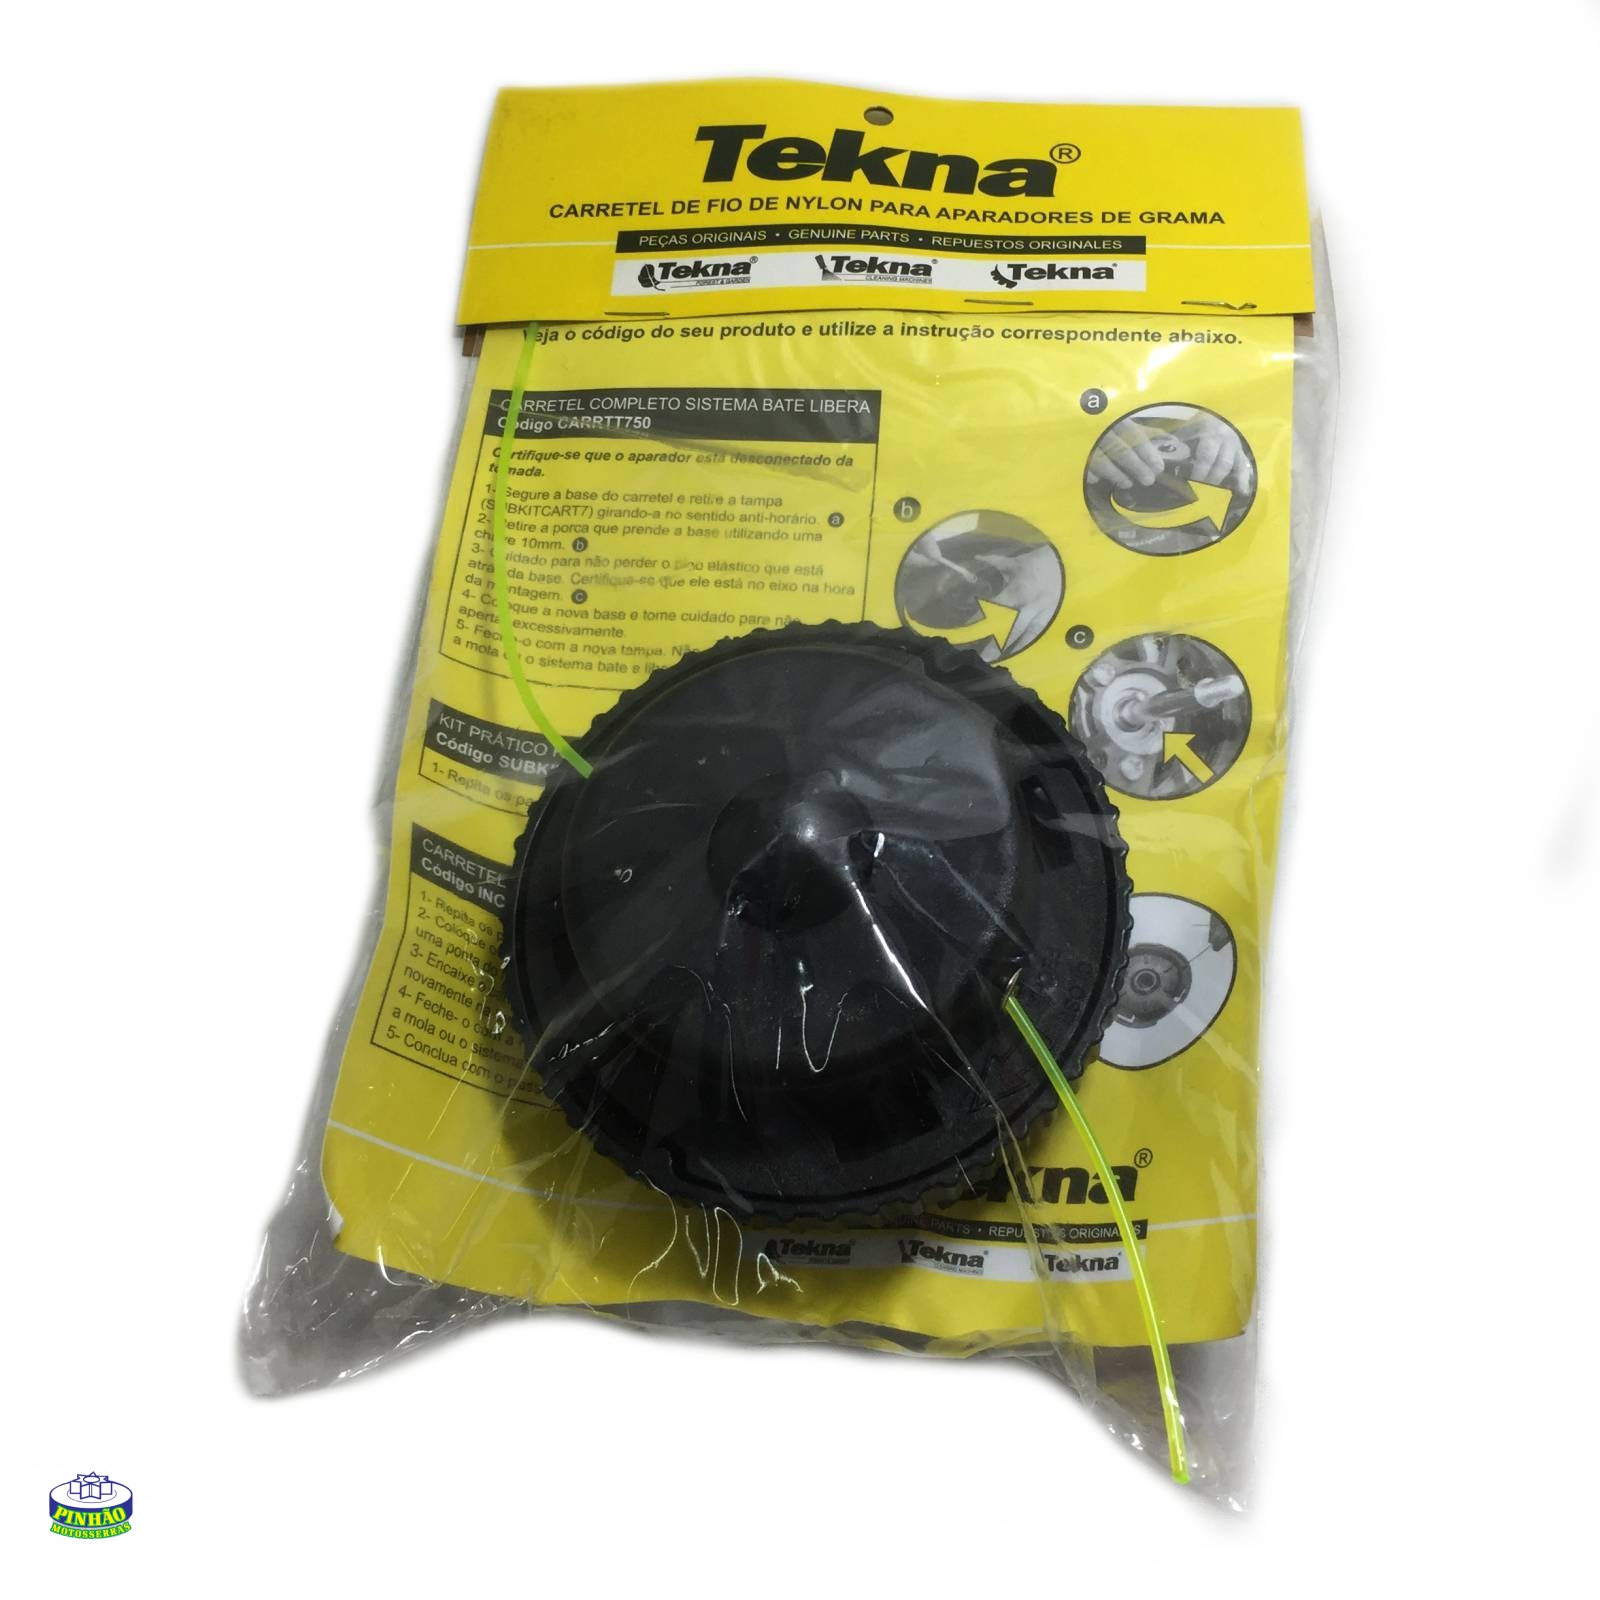 Kit carretel para aparadores de grama elétricos Tekna TT700/750/800/1000